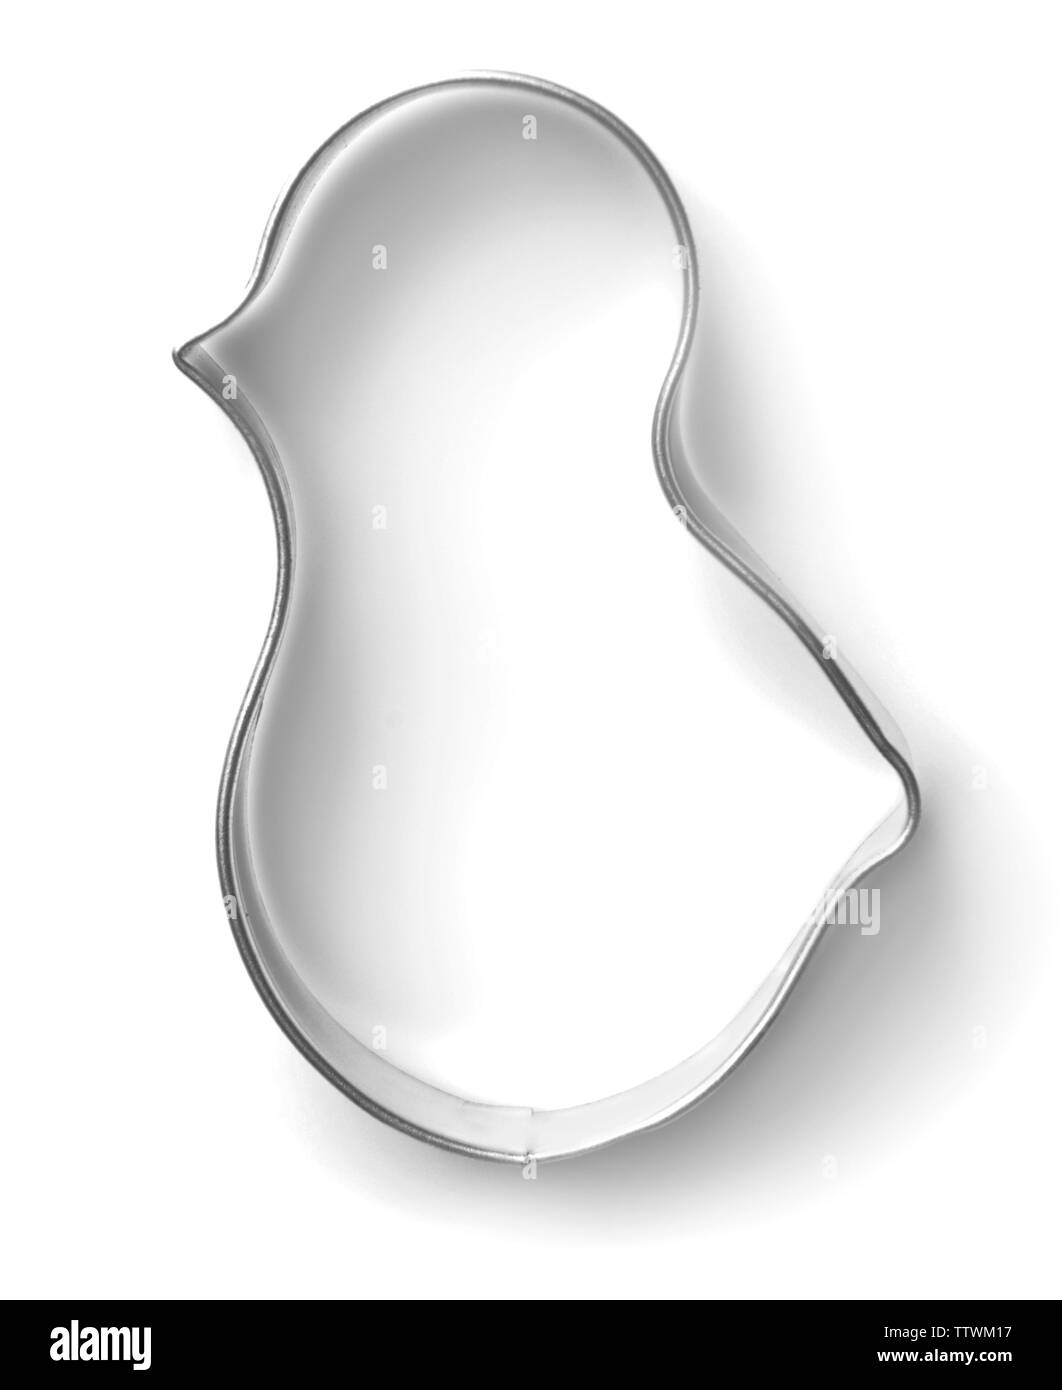 https://c8.alamy.com/comp/TTWM17/cookie-cutter-on-white-background-TTWM17.jpg